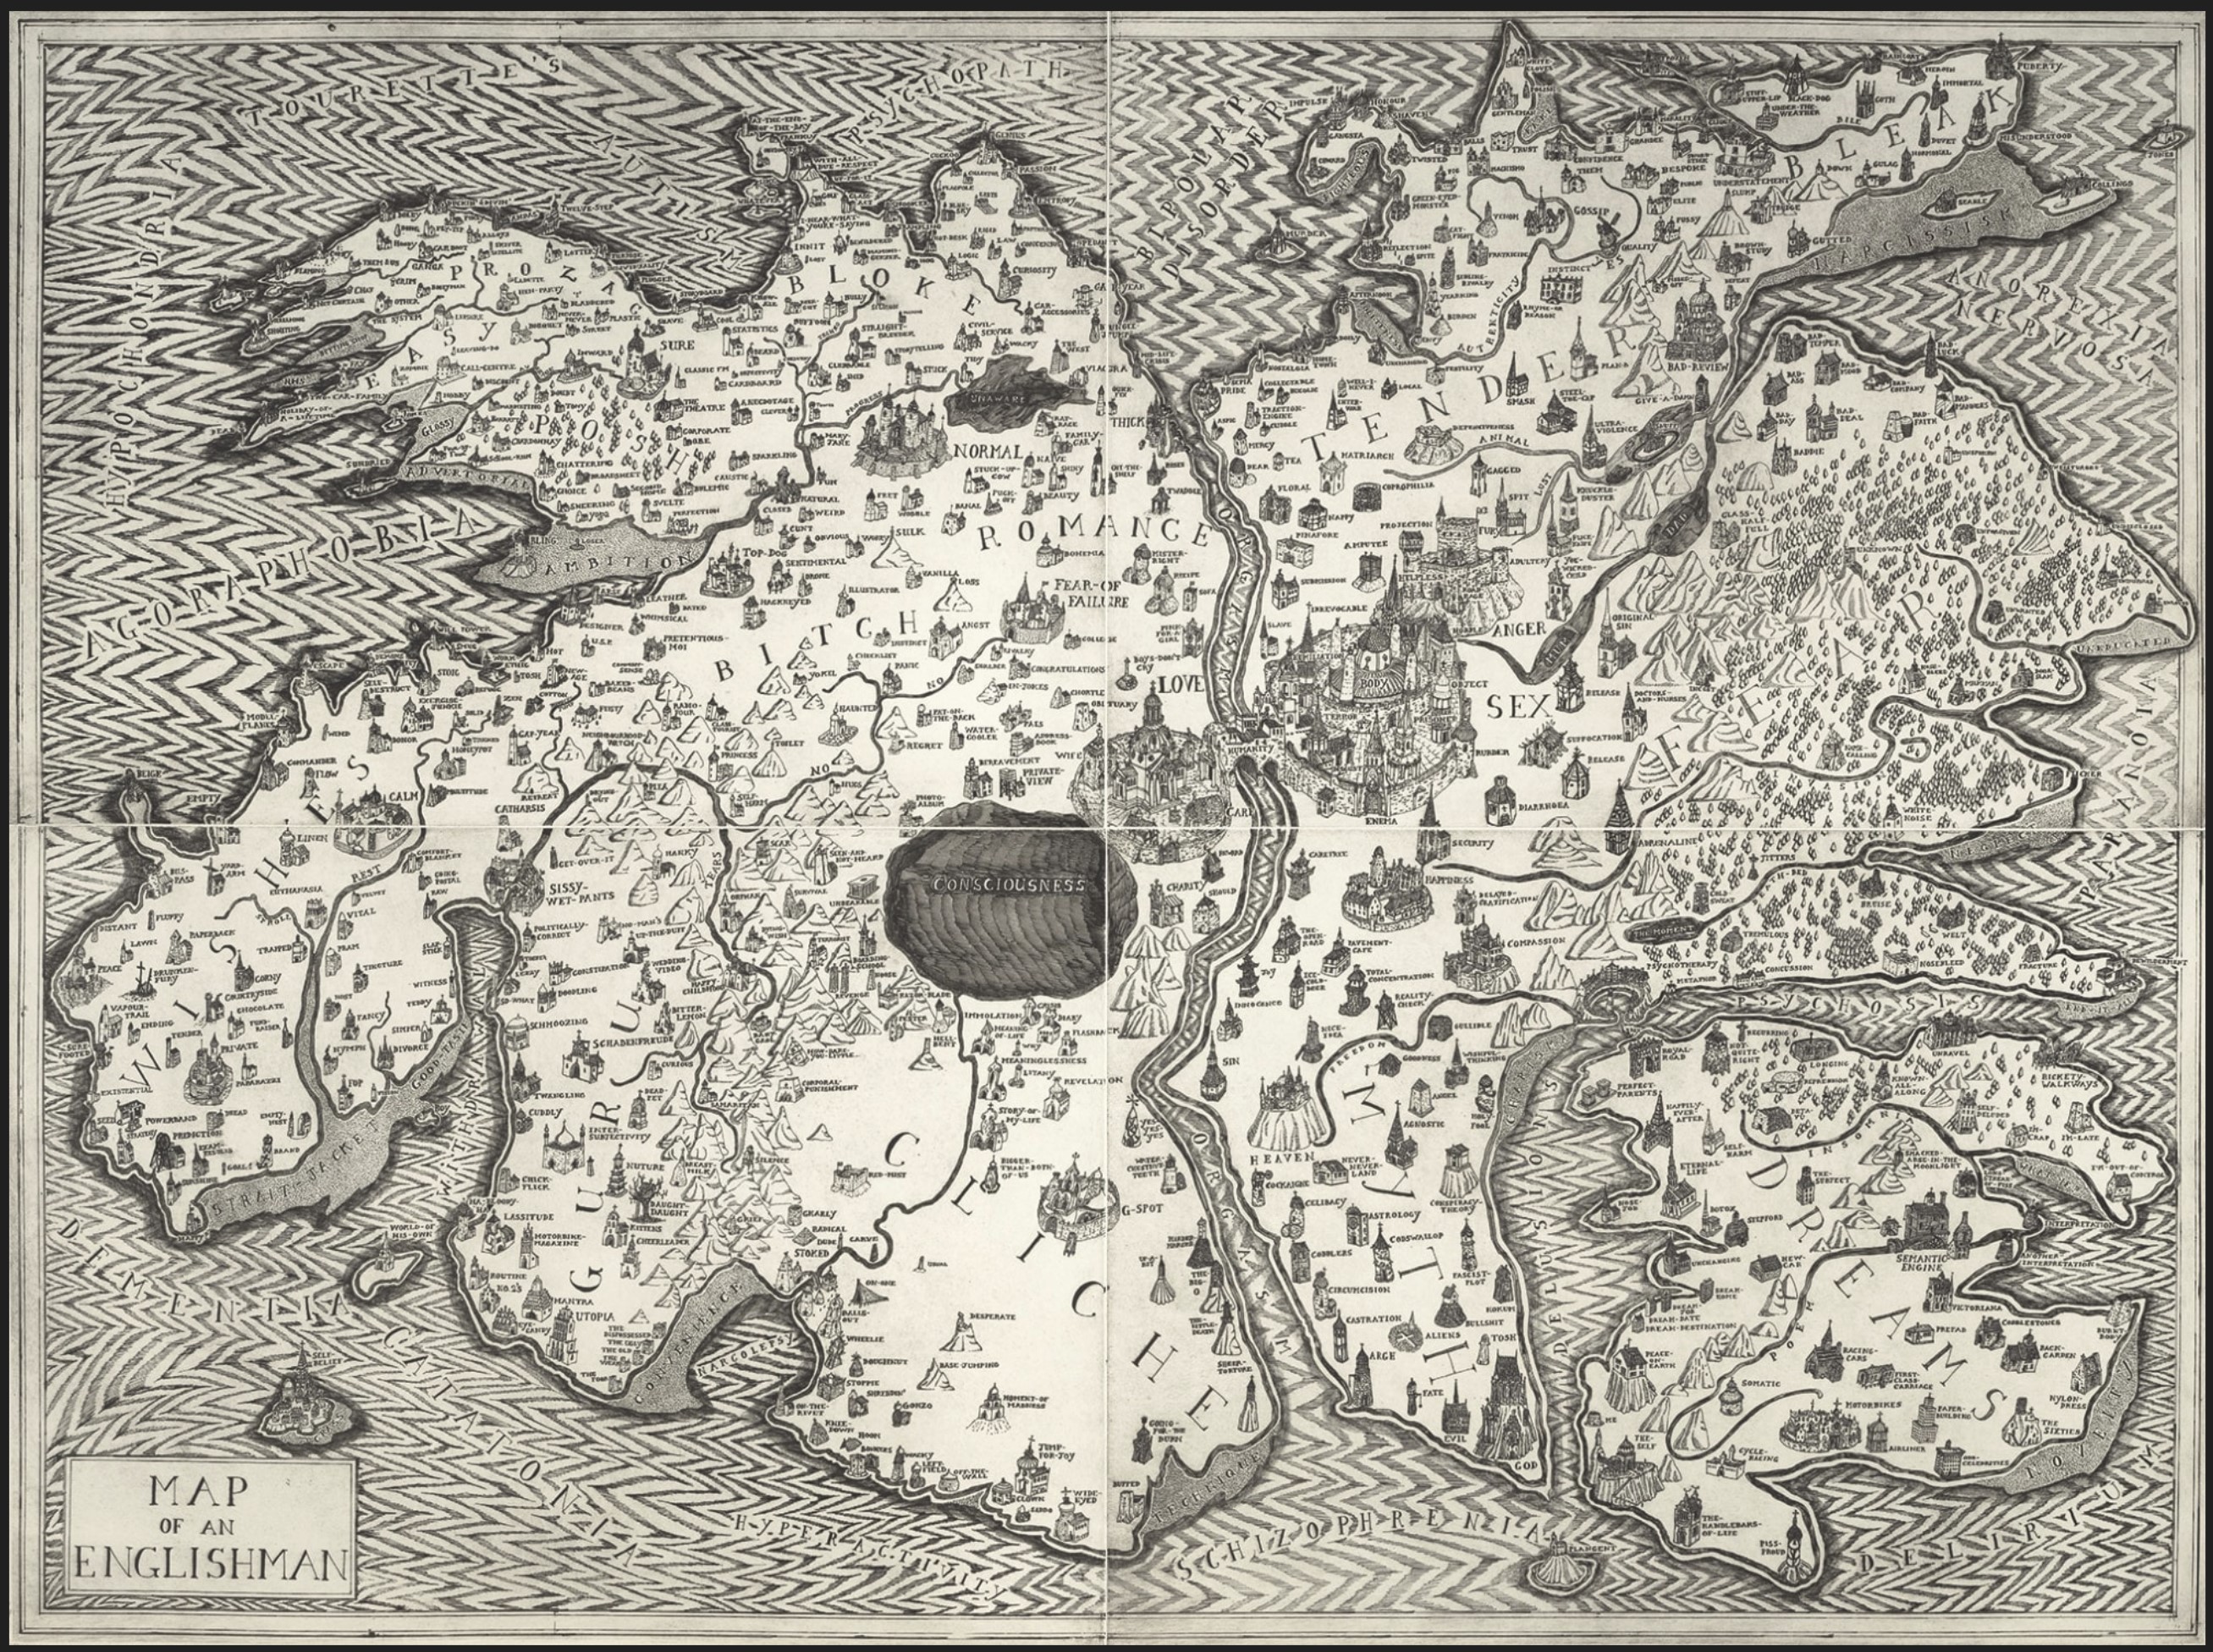 Map of an Englishman (The Paragon Press, pp. 184-185)